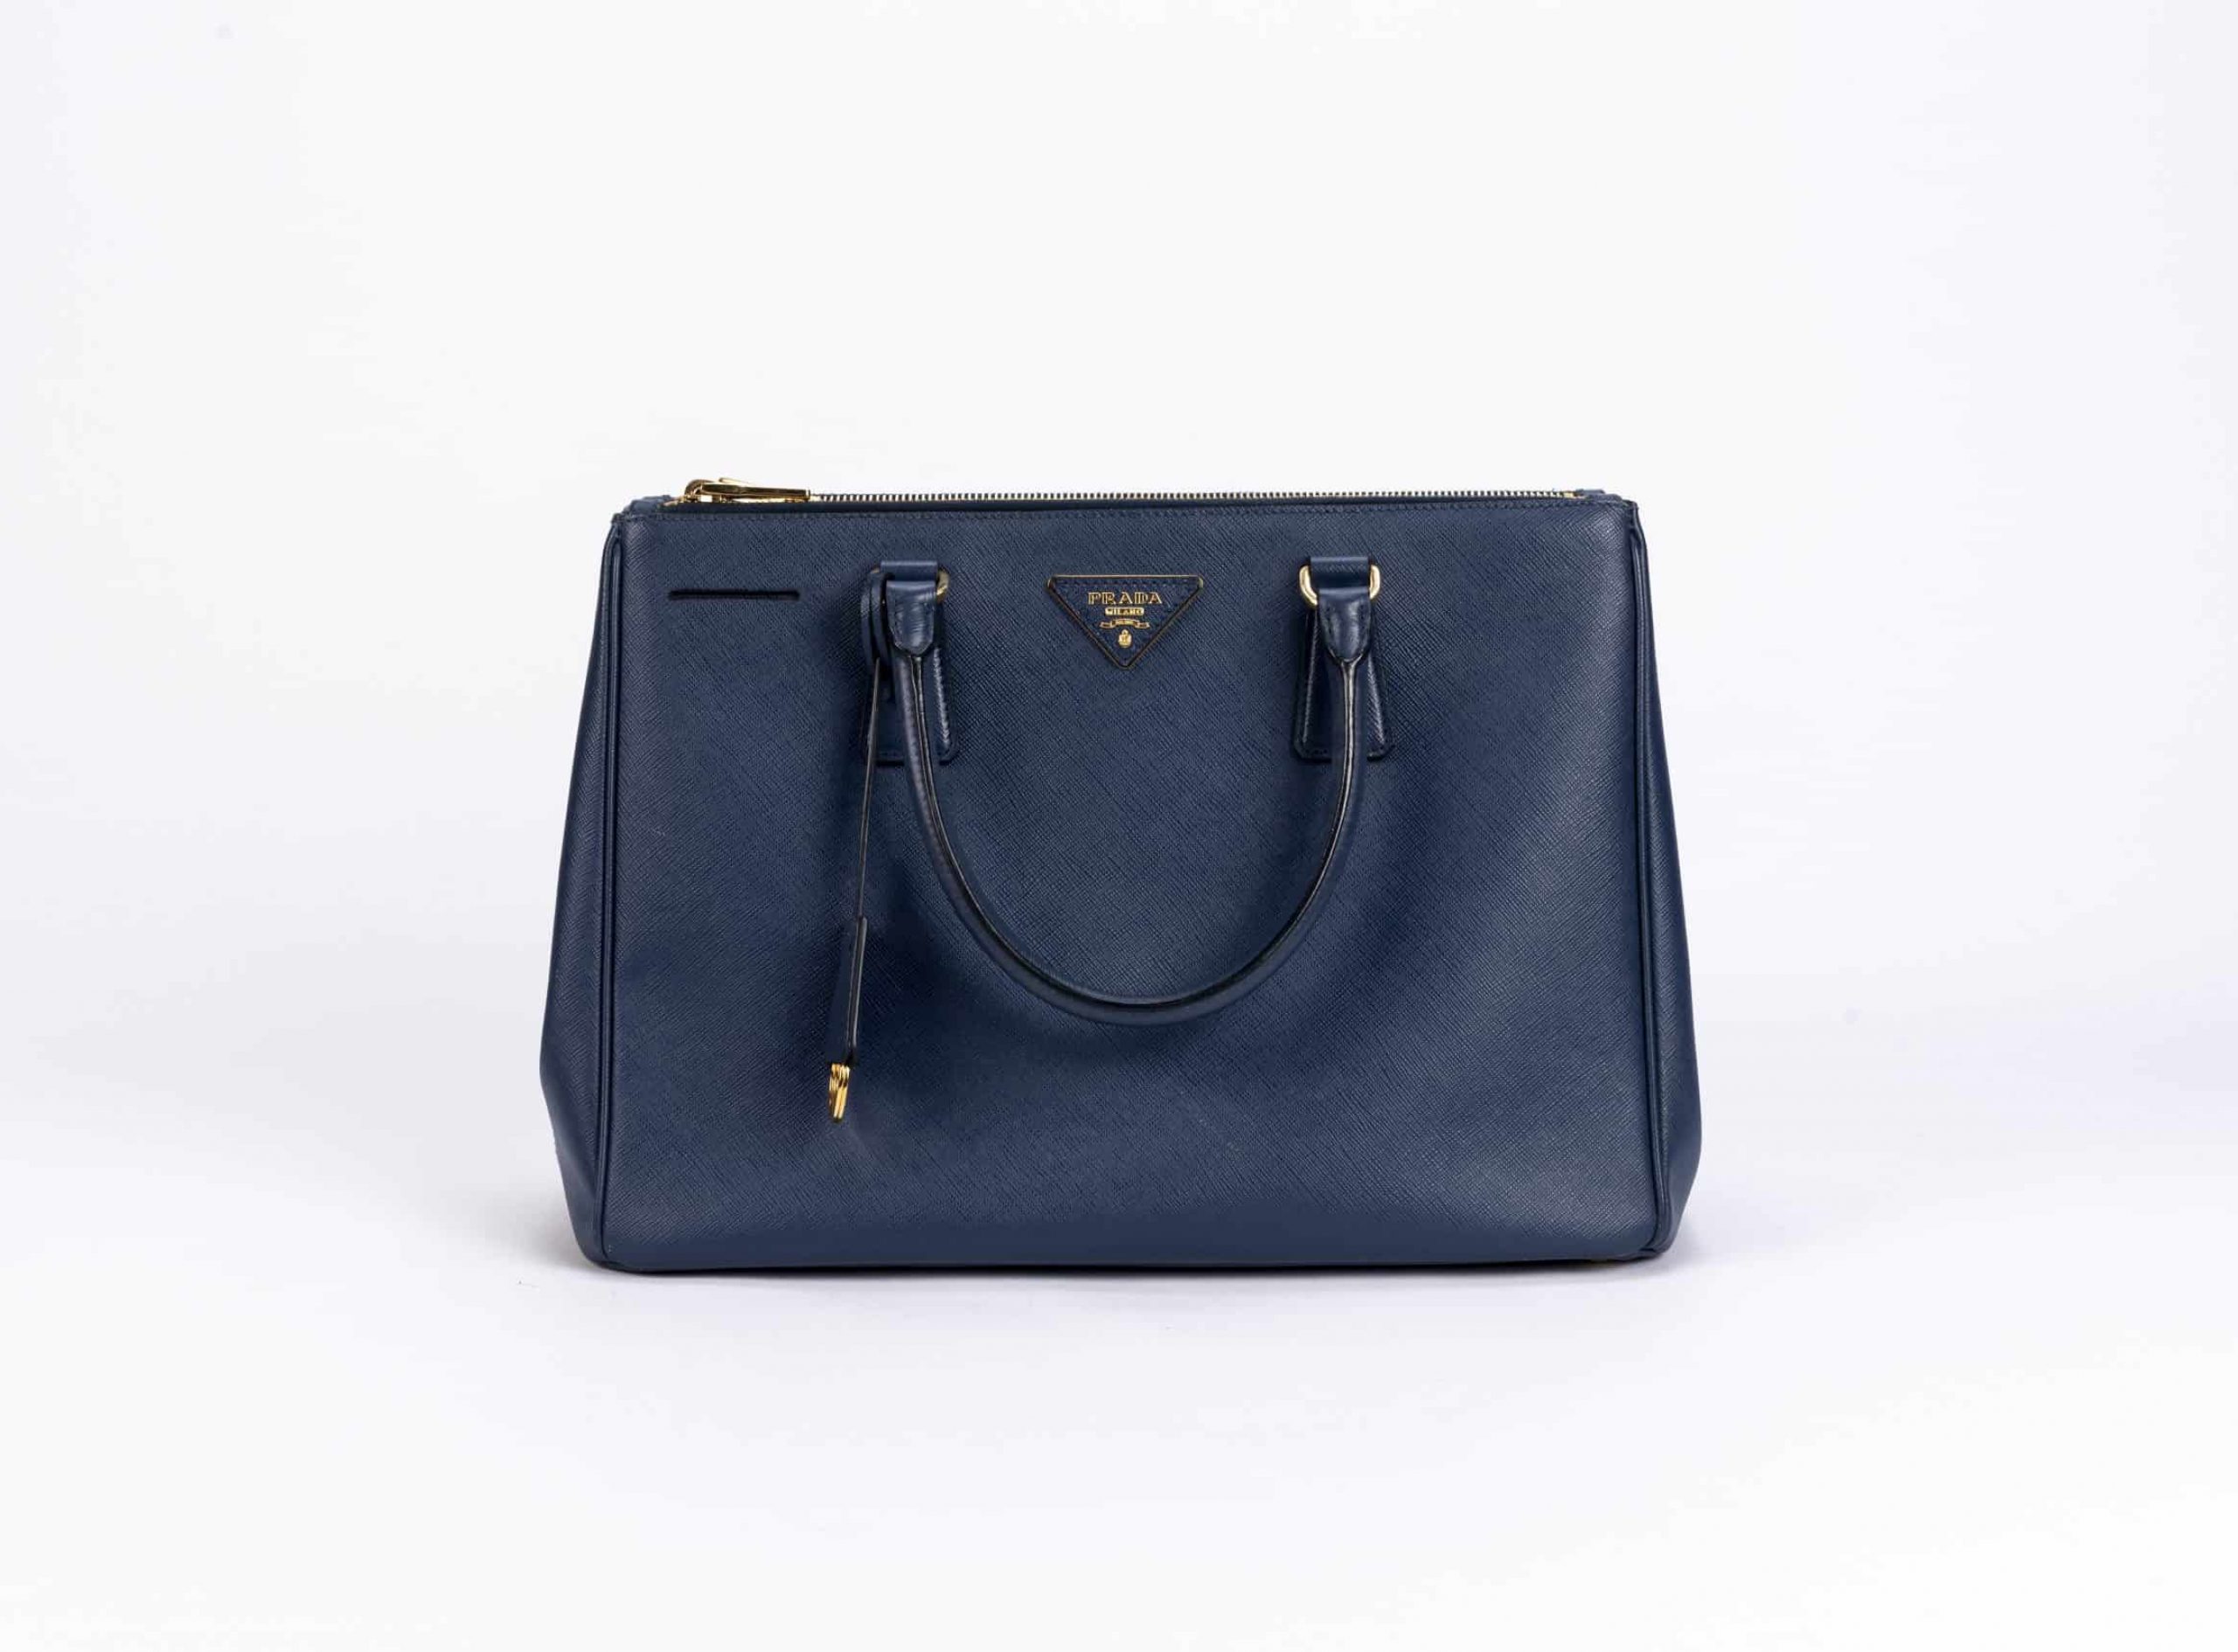 Prada Saffiano Lux Leather Medium Double Zip Tote Bag in Bluette - 1